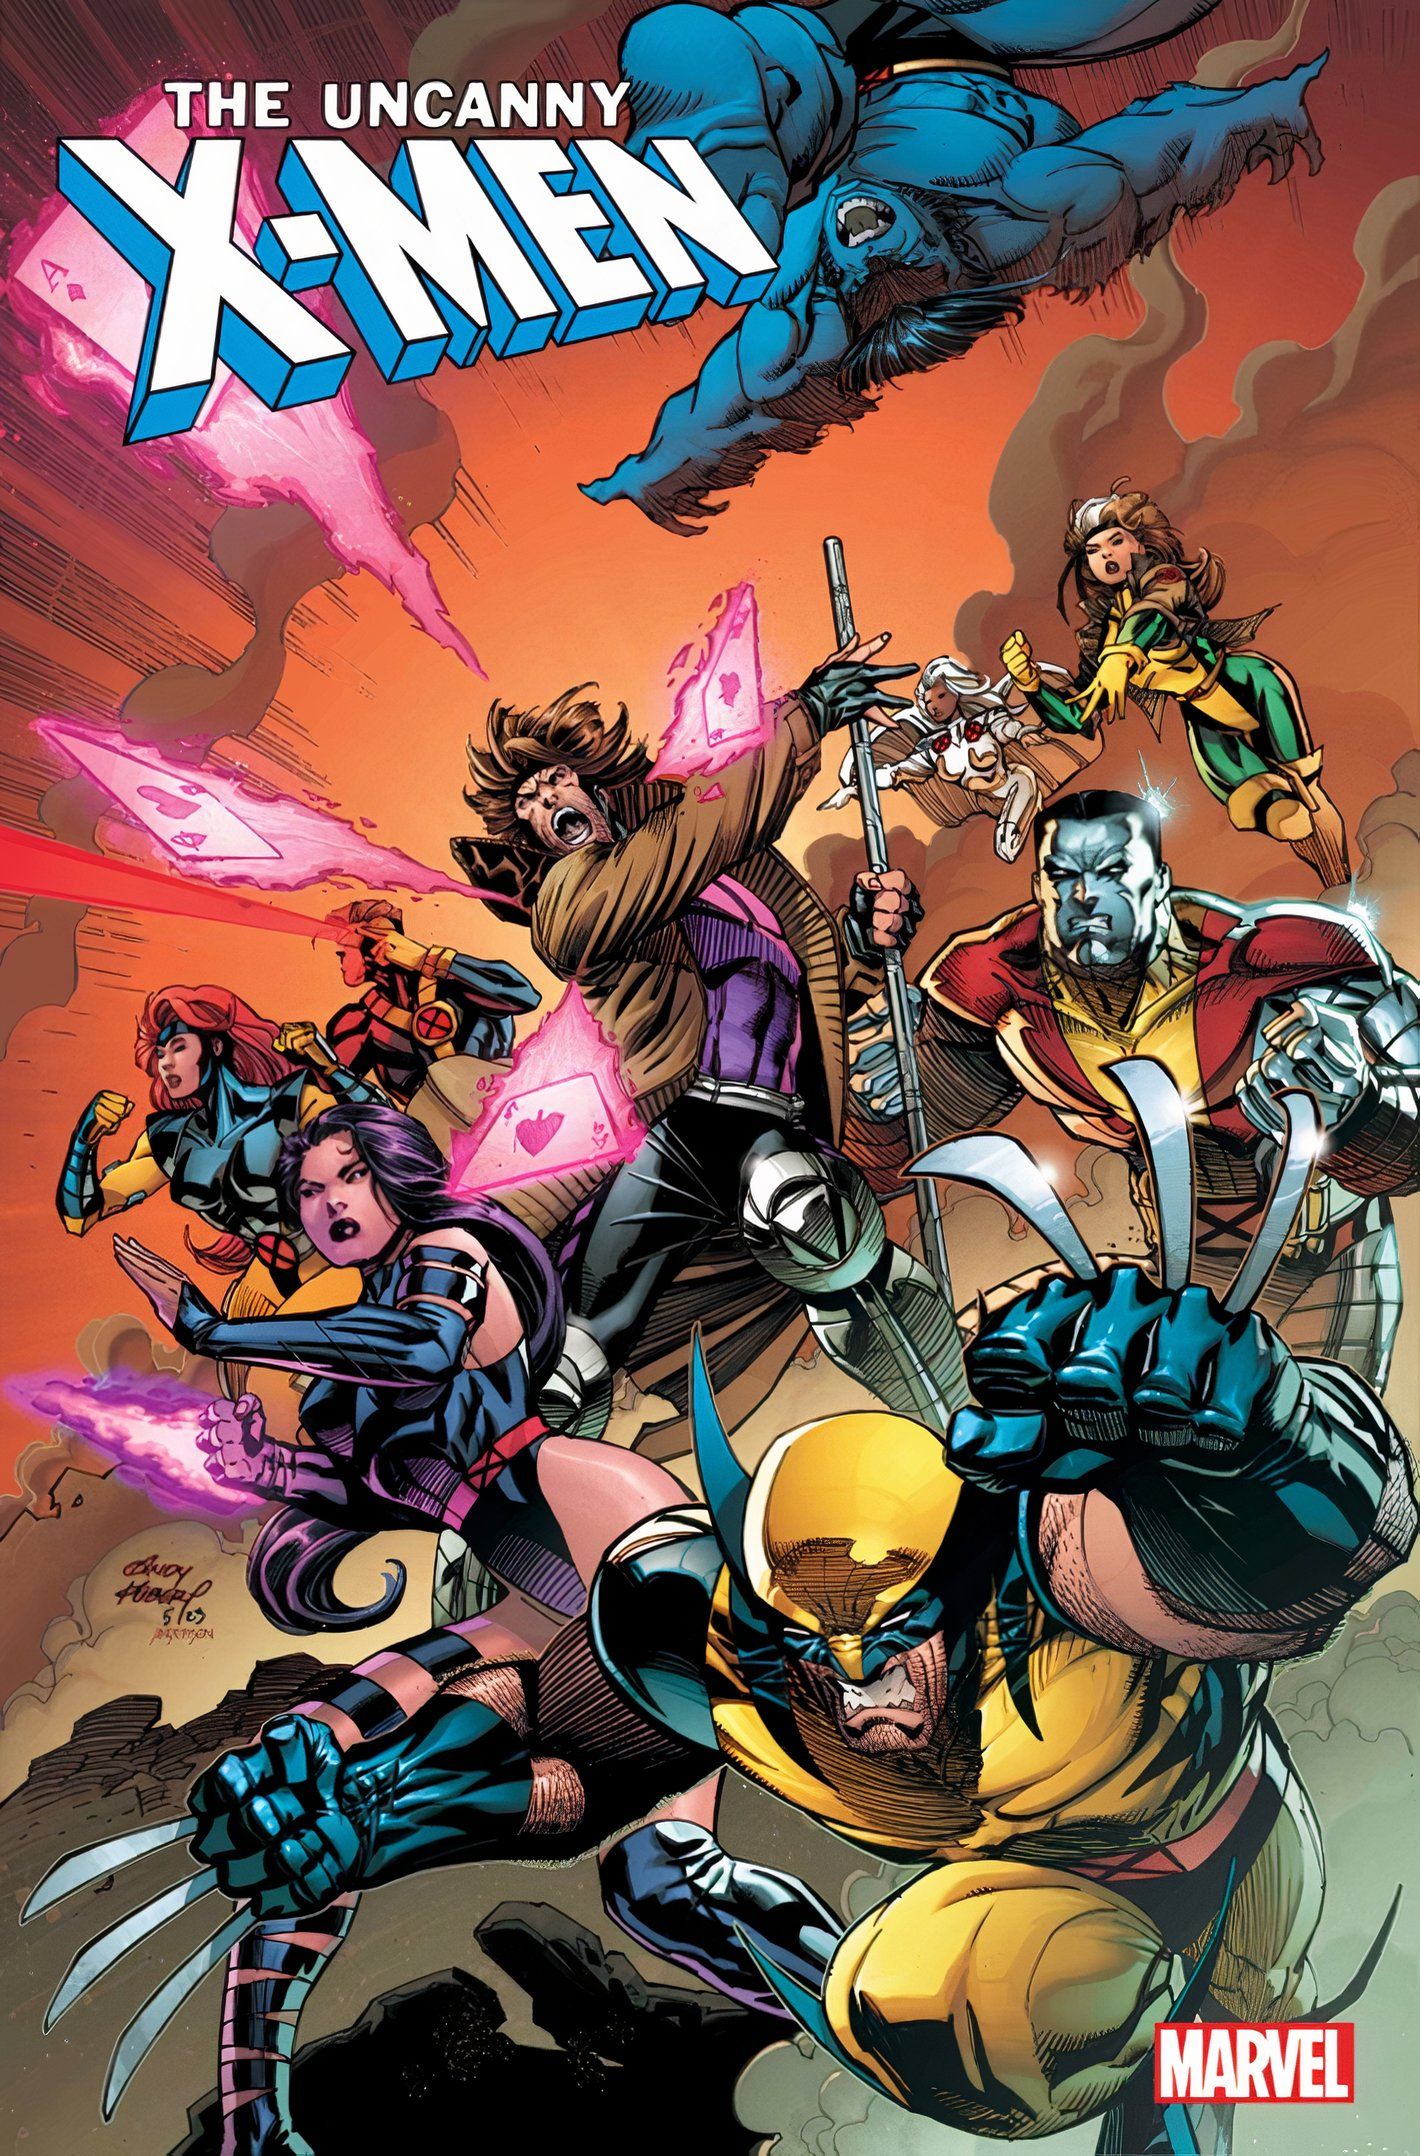 Capa variante de Uncanny X-Men #1, mostrando a equipe entrando na batalha.